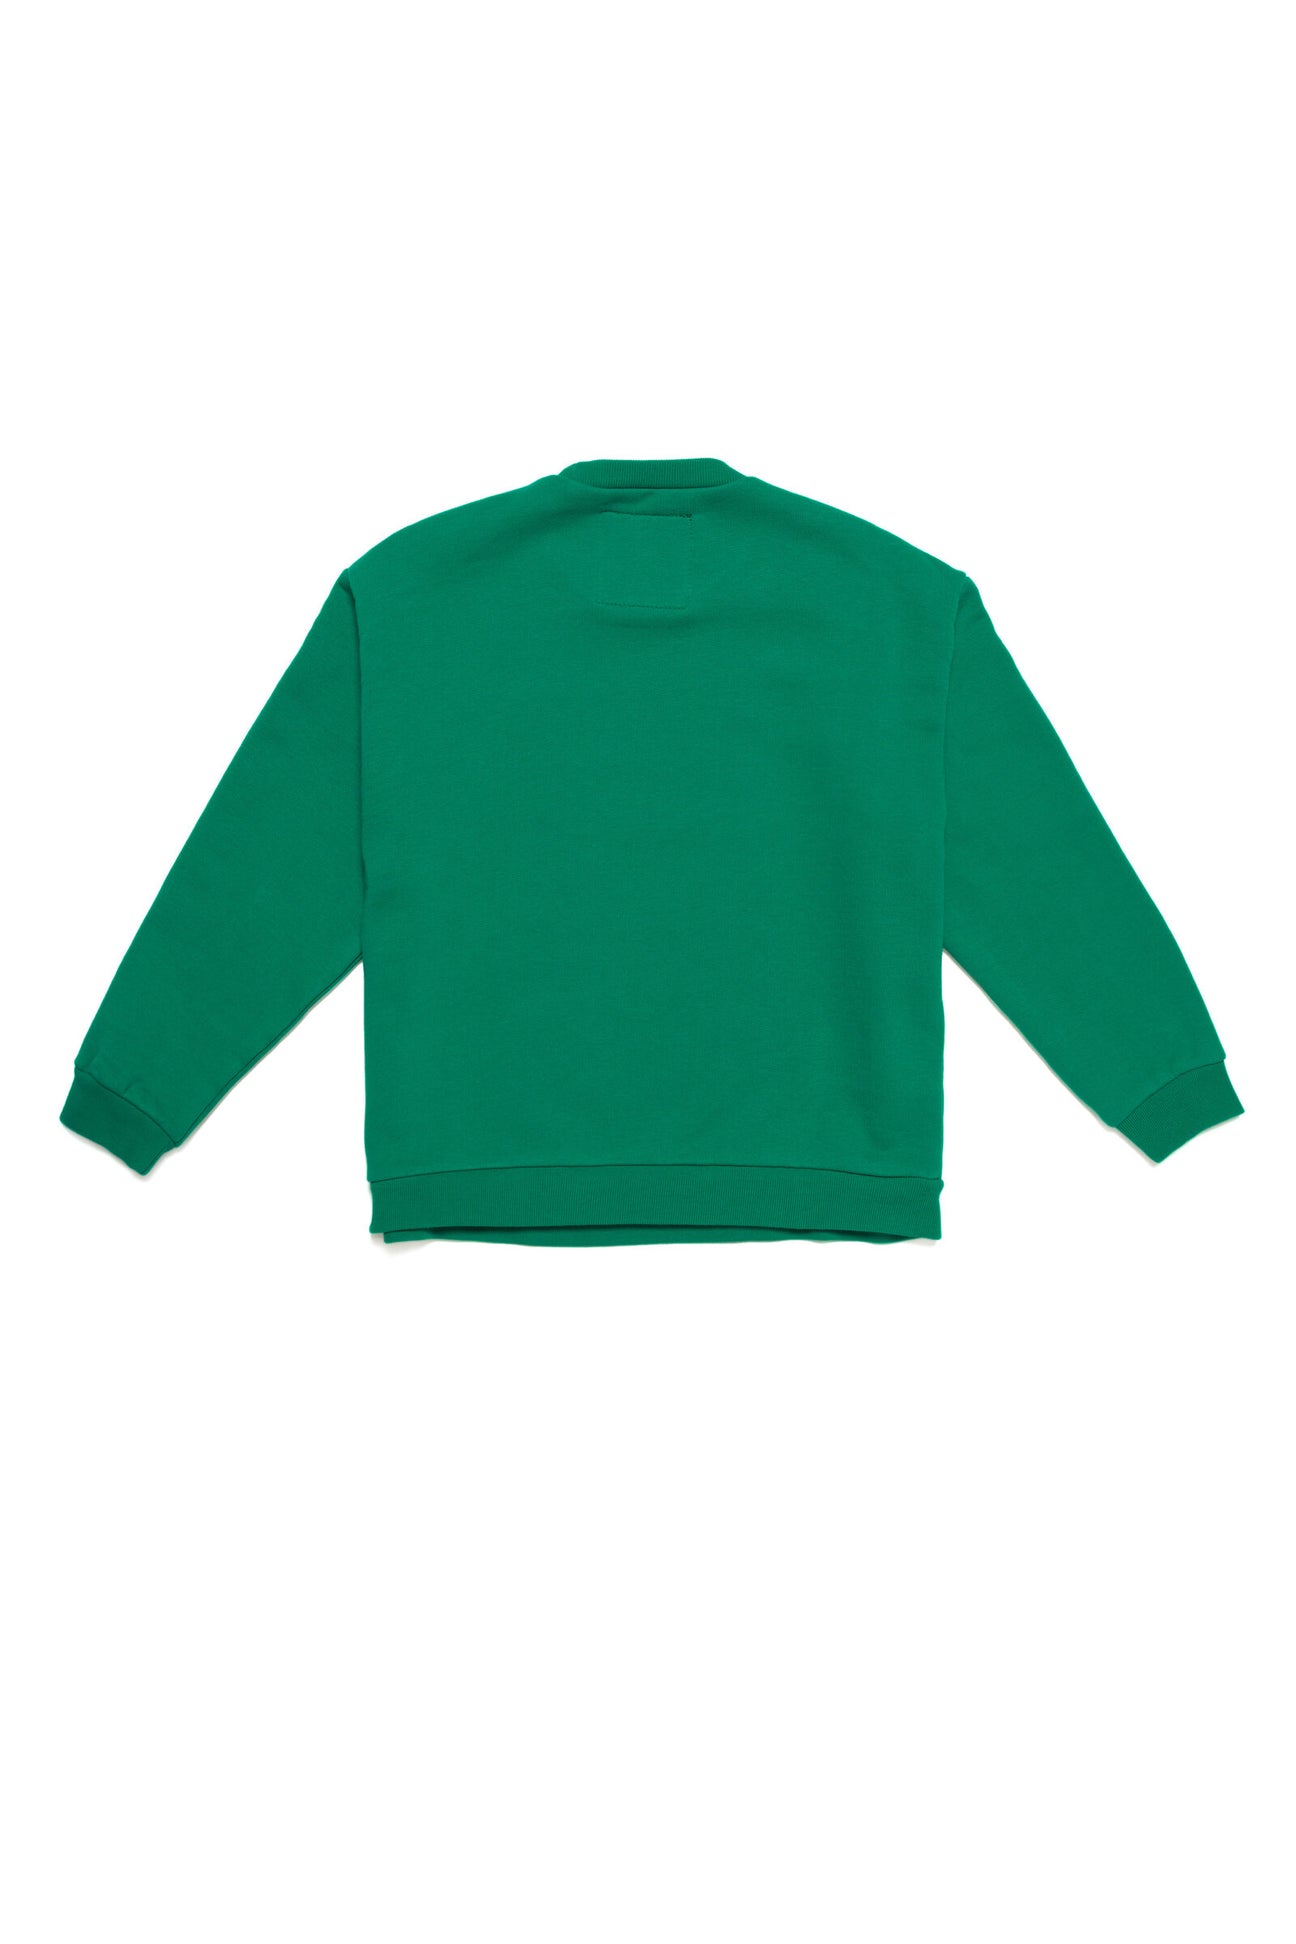 Deadstock green crewneck sweatshirt with logo on the front Deadstock green crewneck sweatshirt with logo on the front